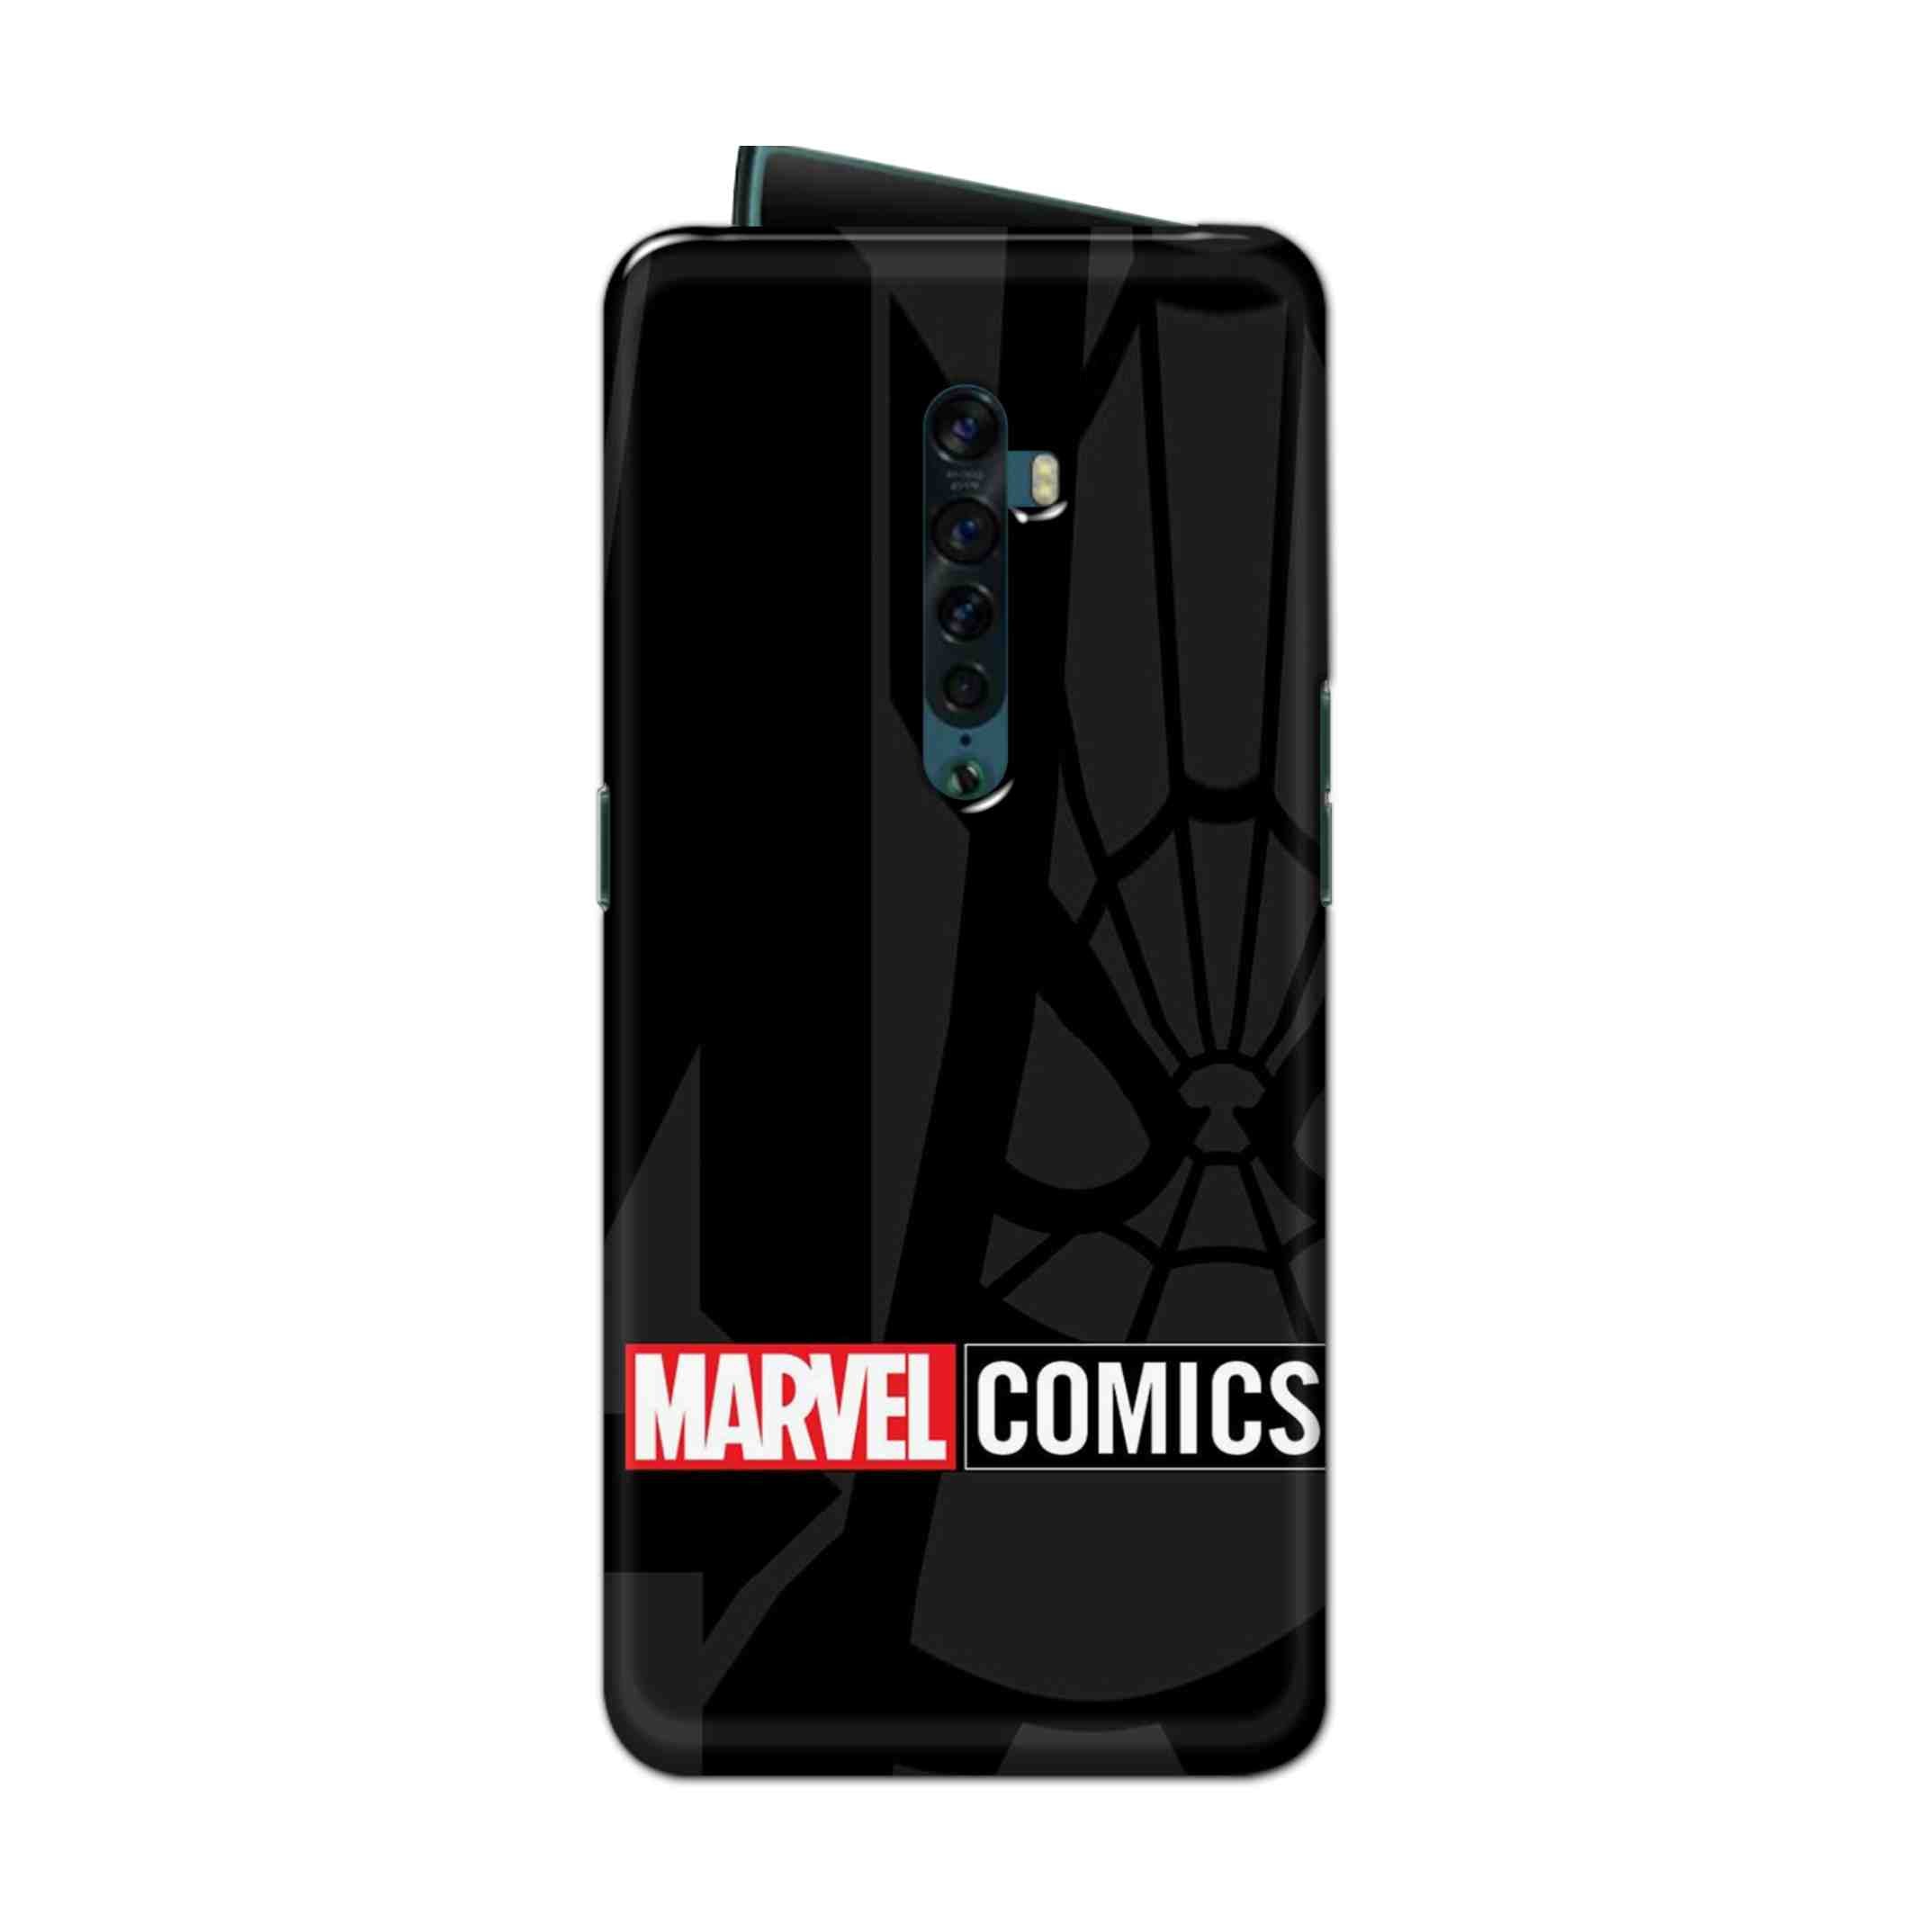 Buy Marvel Comics Hard Back Mobile Phone Case Cover For Oppo Reno 2 Online